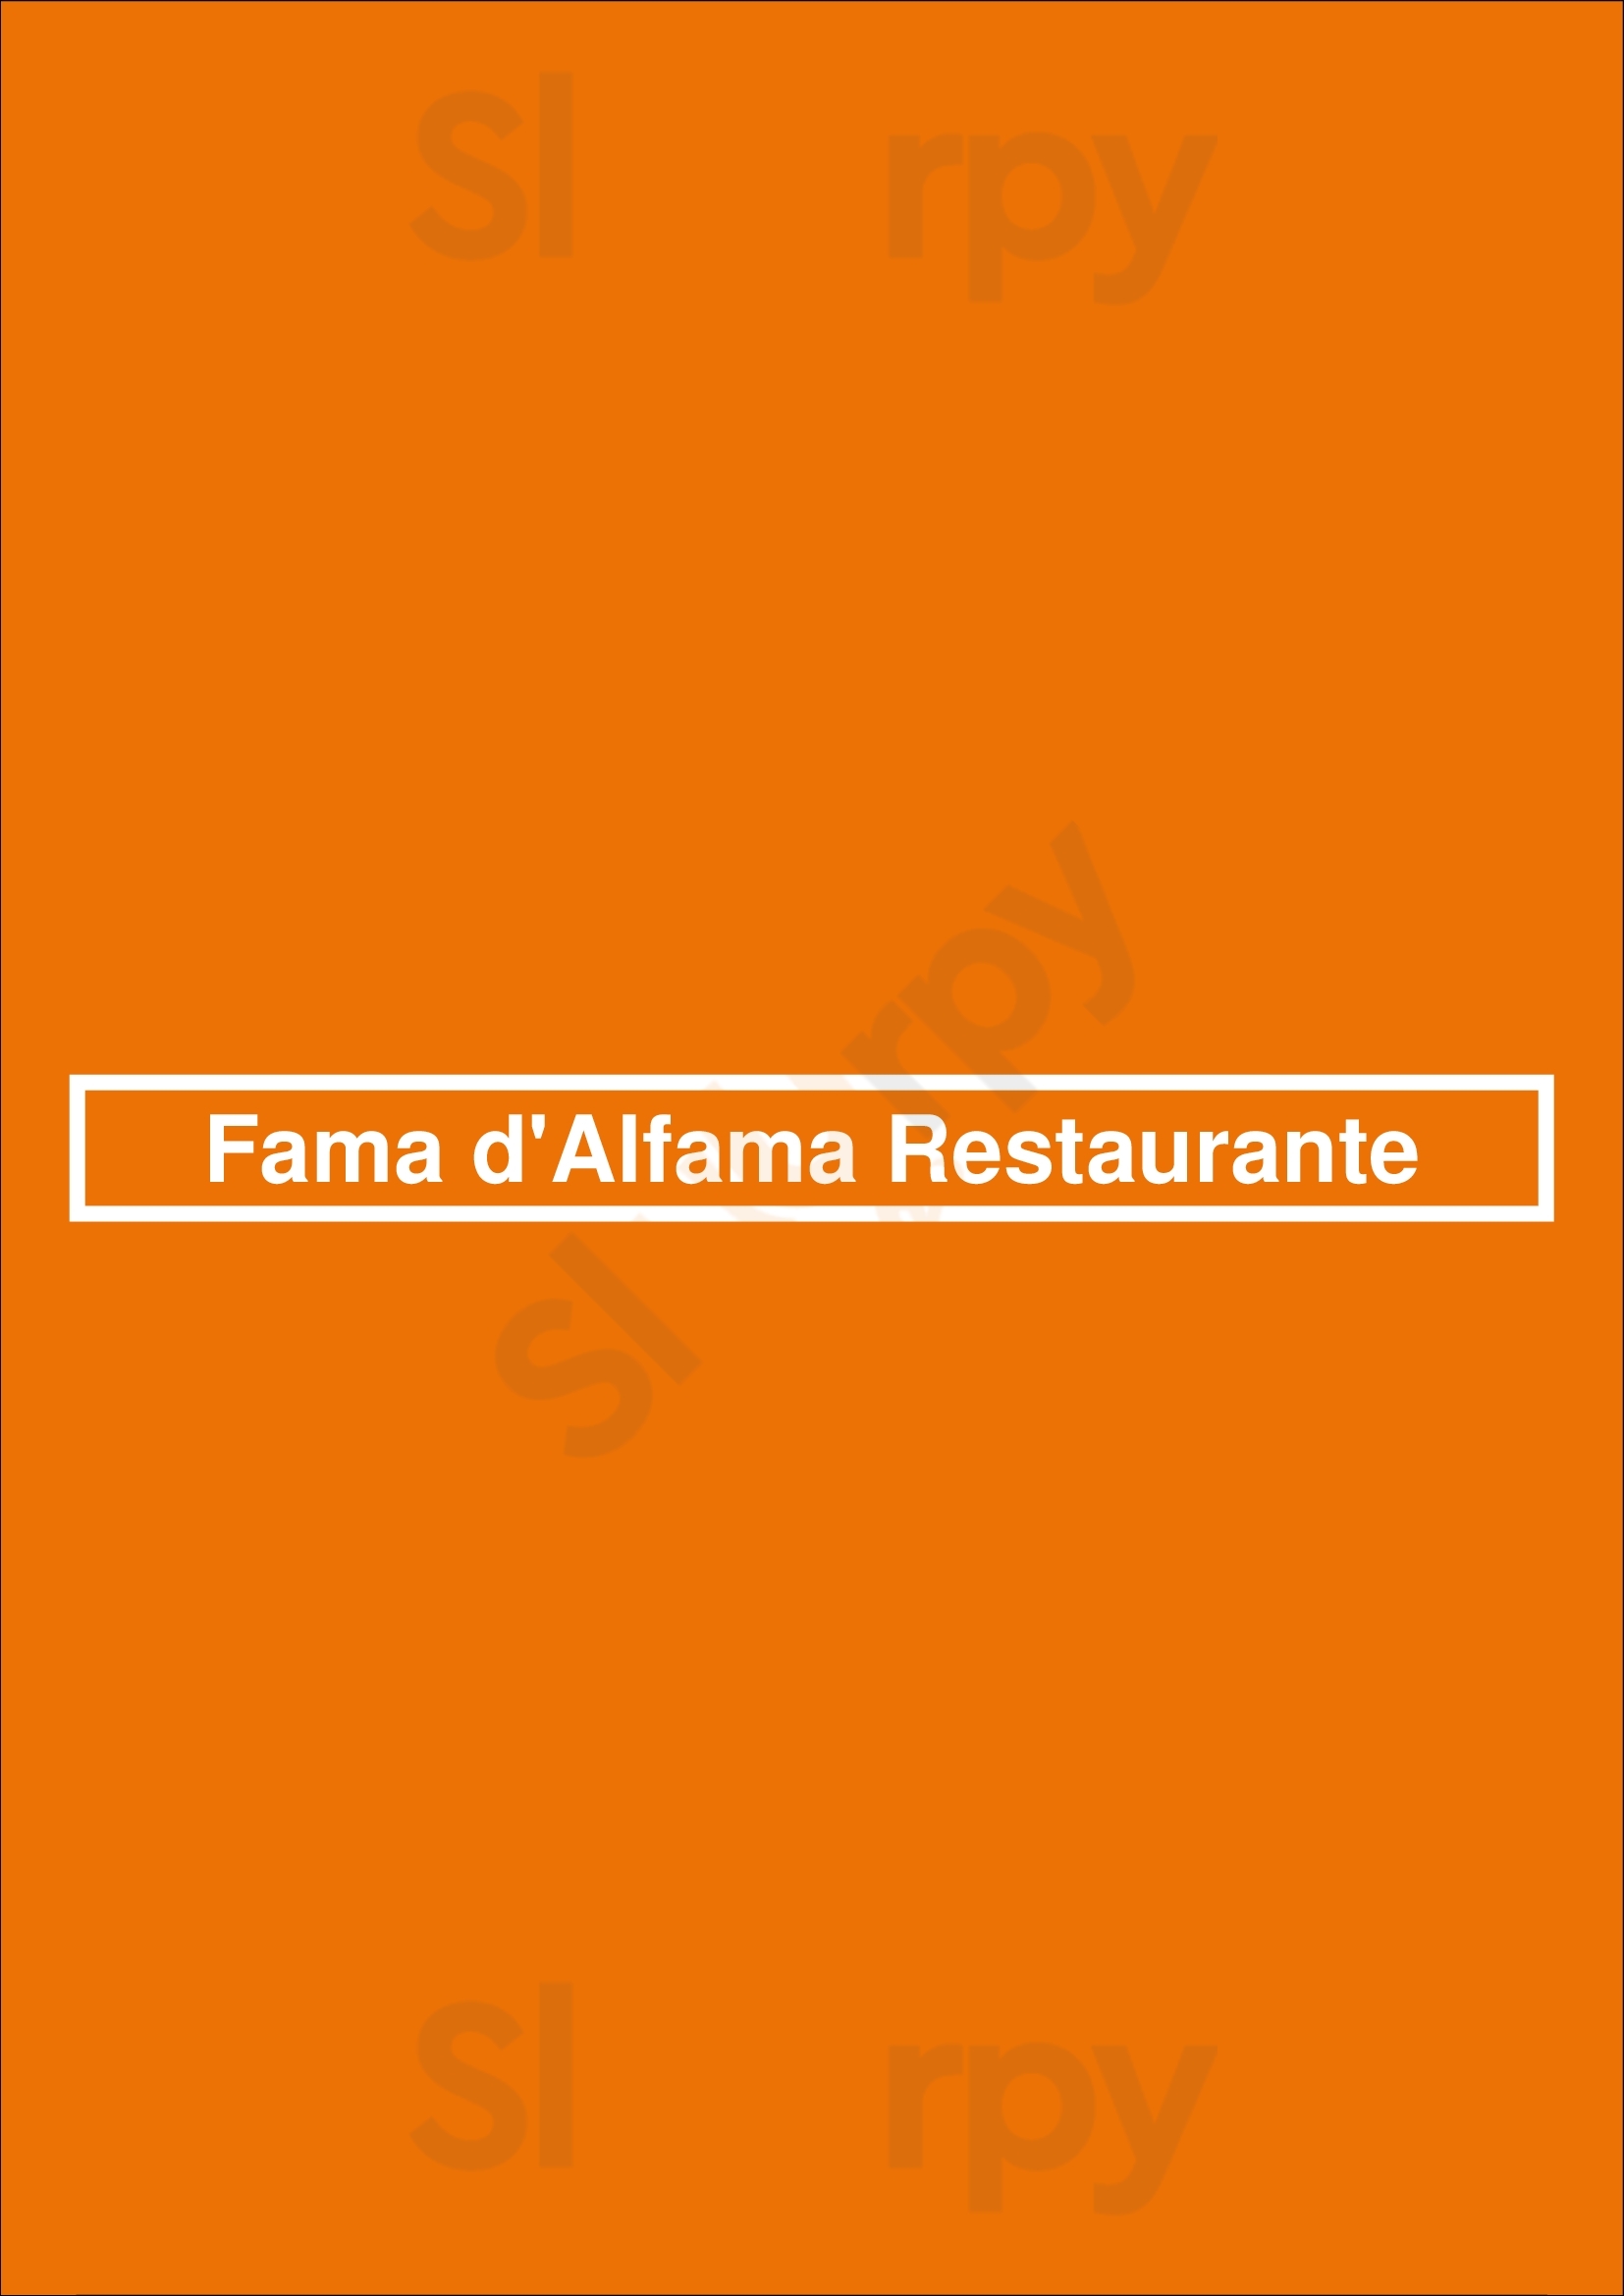 Restaurante Fama D'alfama Lisboa Menu - 1